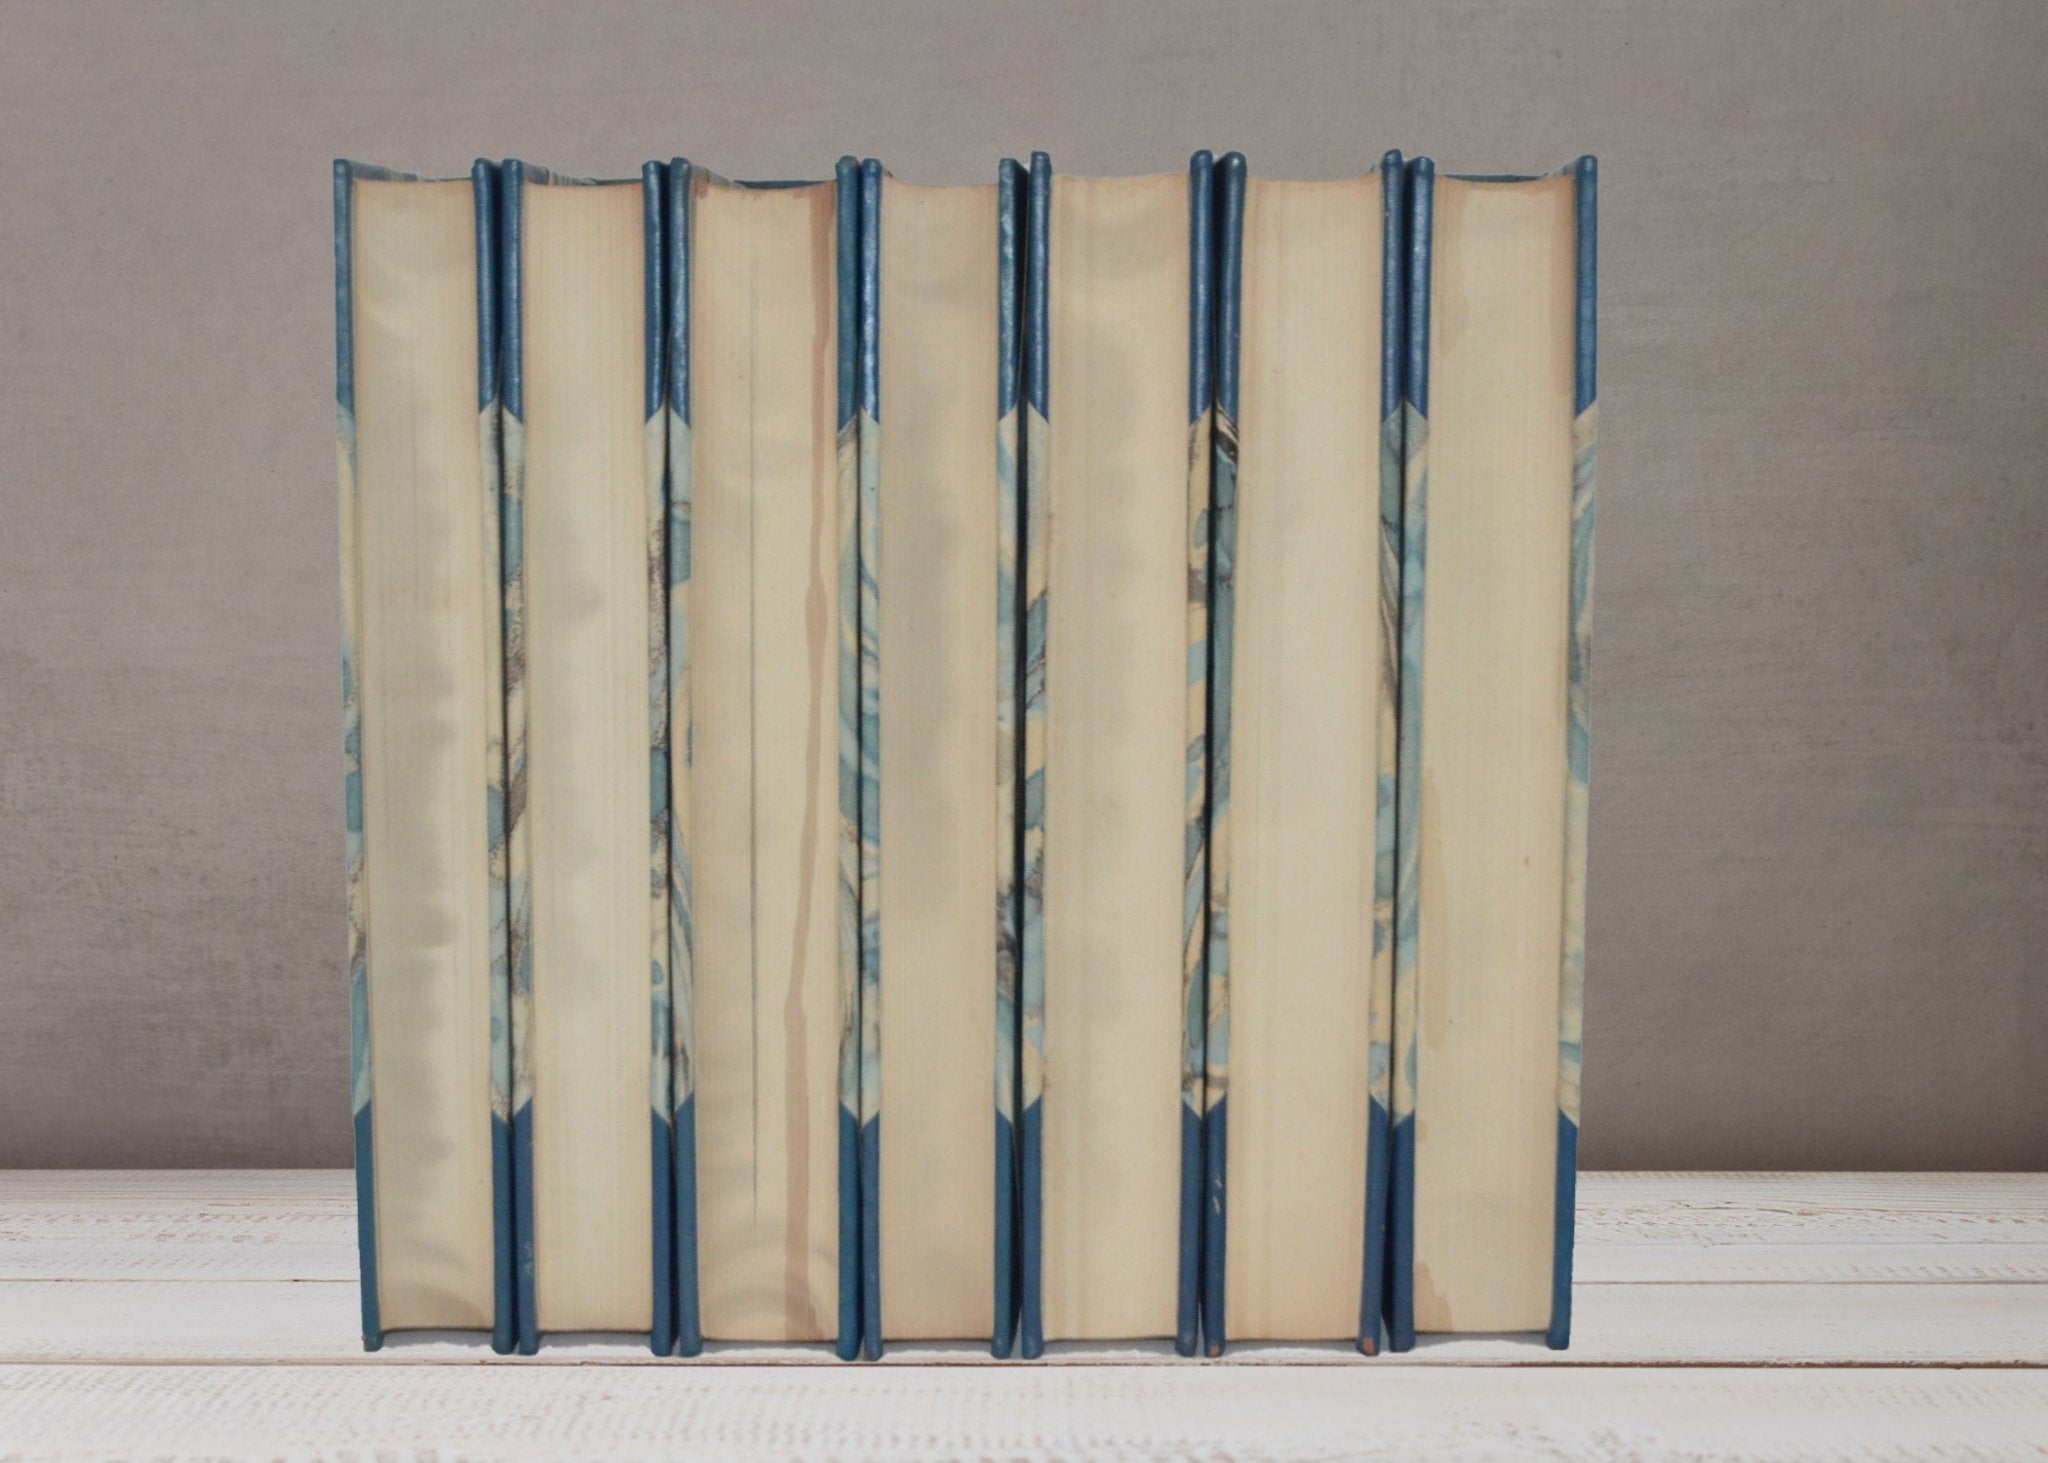 Antique Leather Bound Book Décor – 10” Teal Blue Color - Brookfield Books